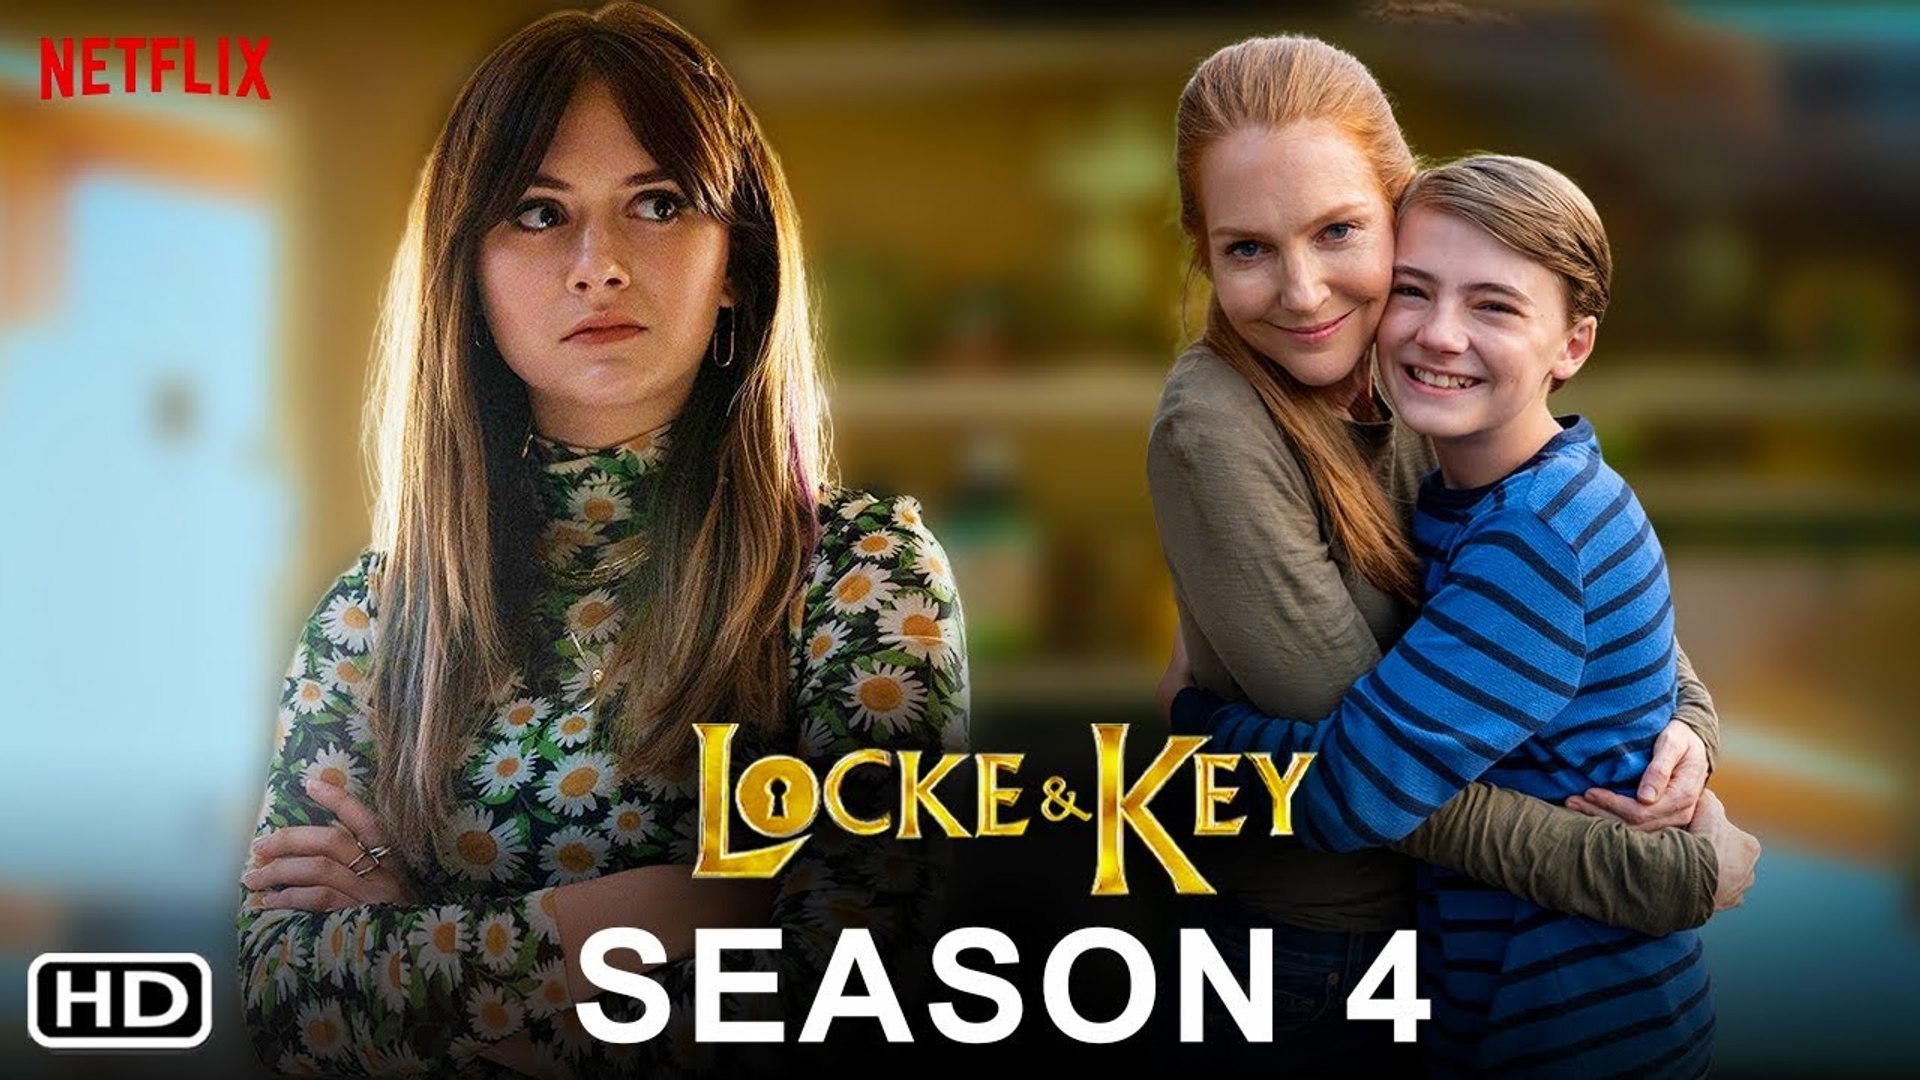 Locke & Key Season 4 Trailer - Netflix, Emilia Jones, Jackson Robert Scott  - video Dailymotion